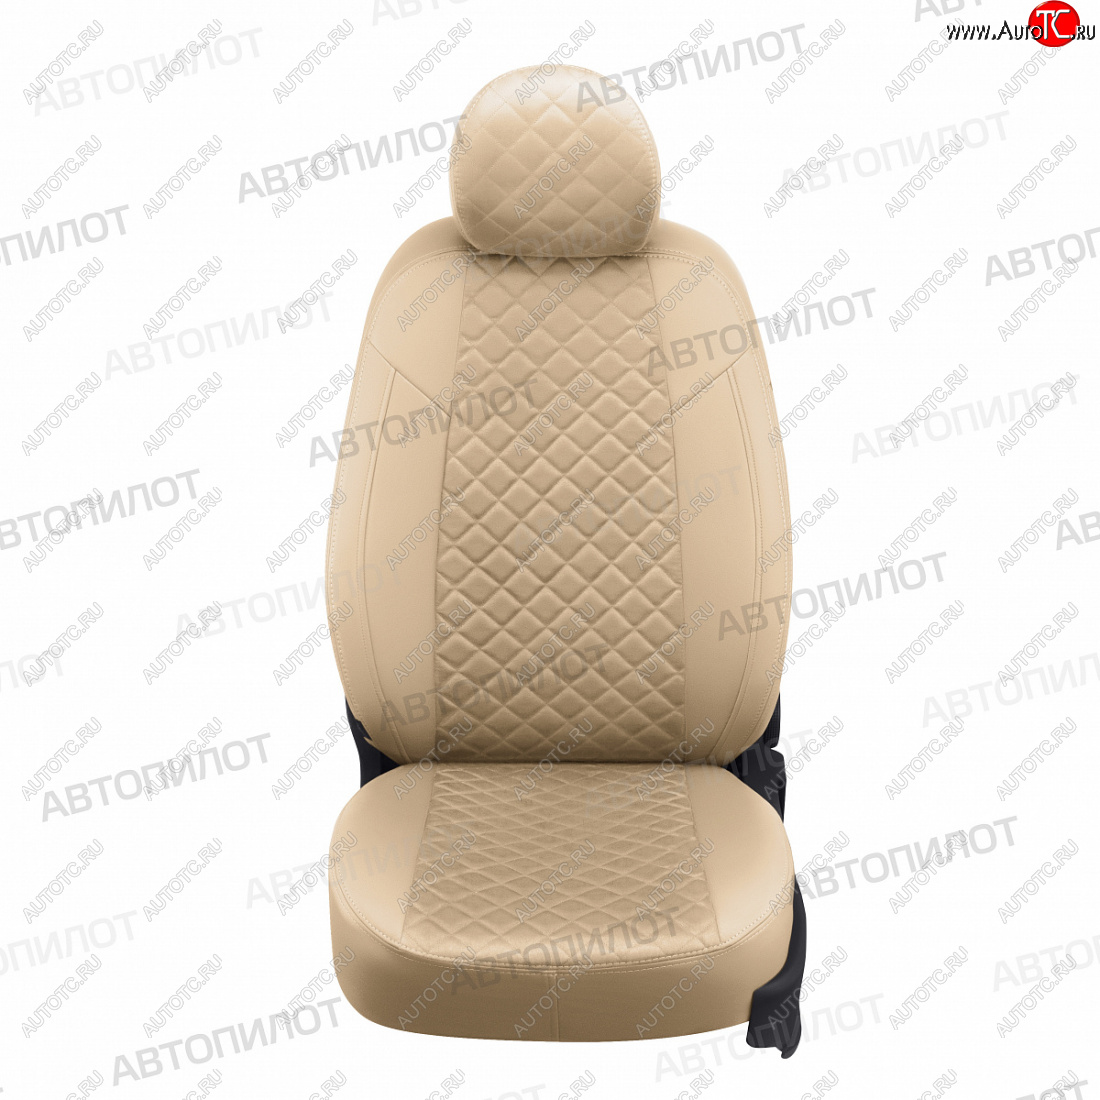 13 999 р. Чехлы сидений (экокожа/алькантара, 40/60) Автопилот Ромб  Volkswagen Polo  9N1 (2001-2009) (бежевый)